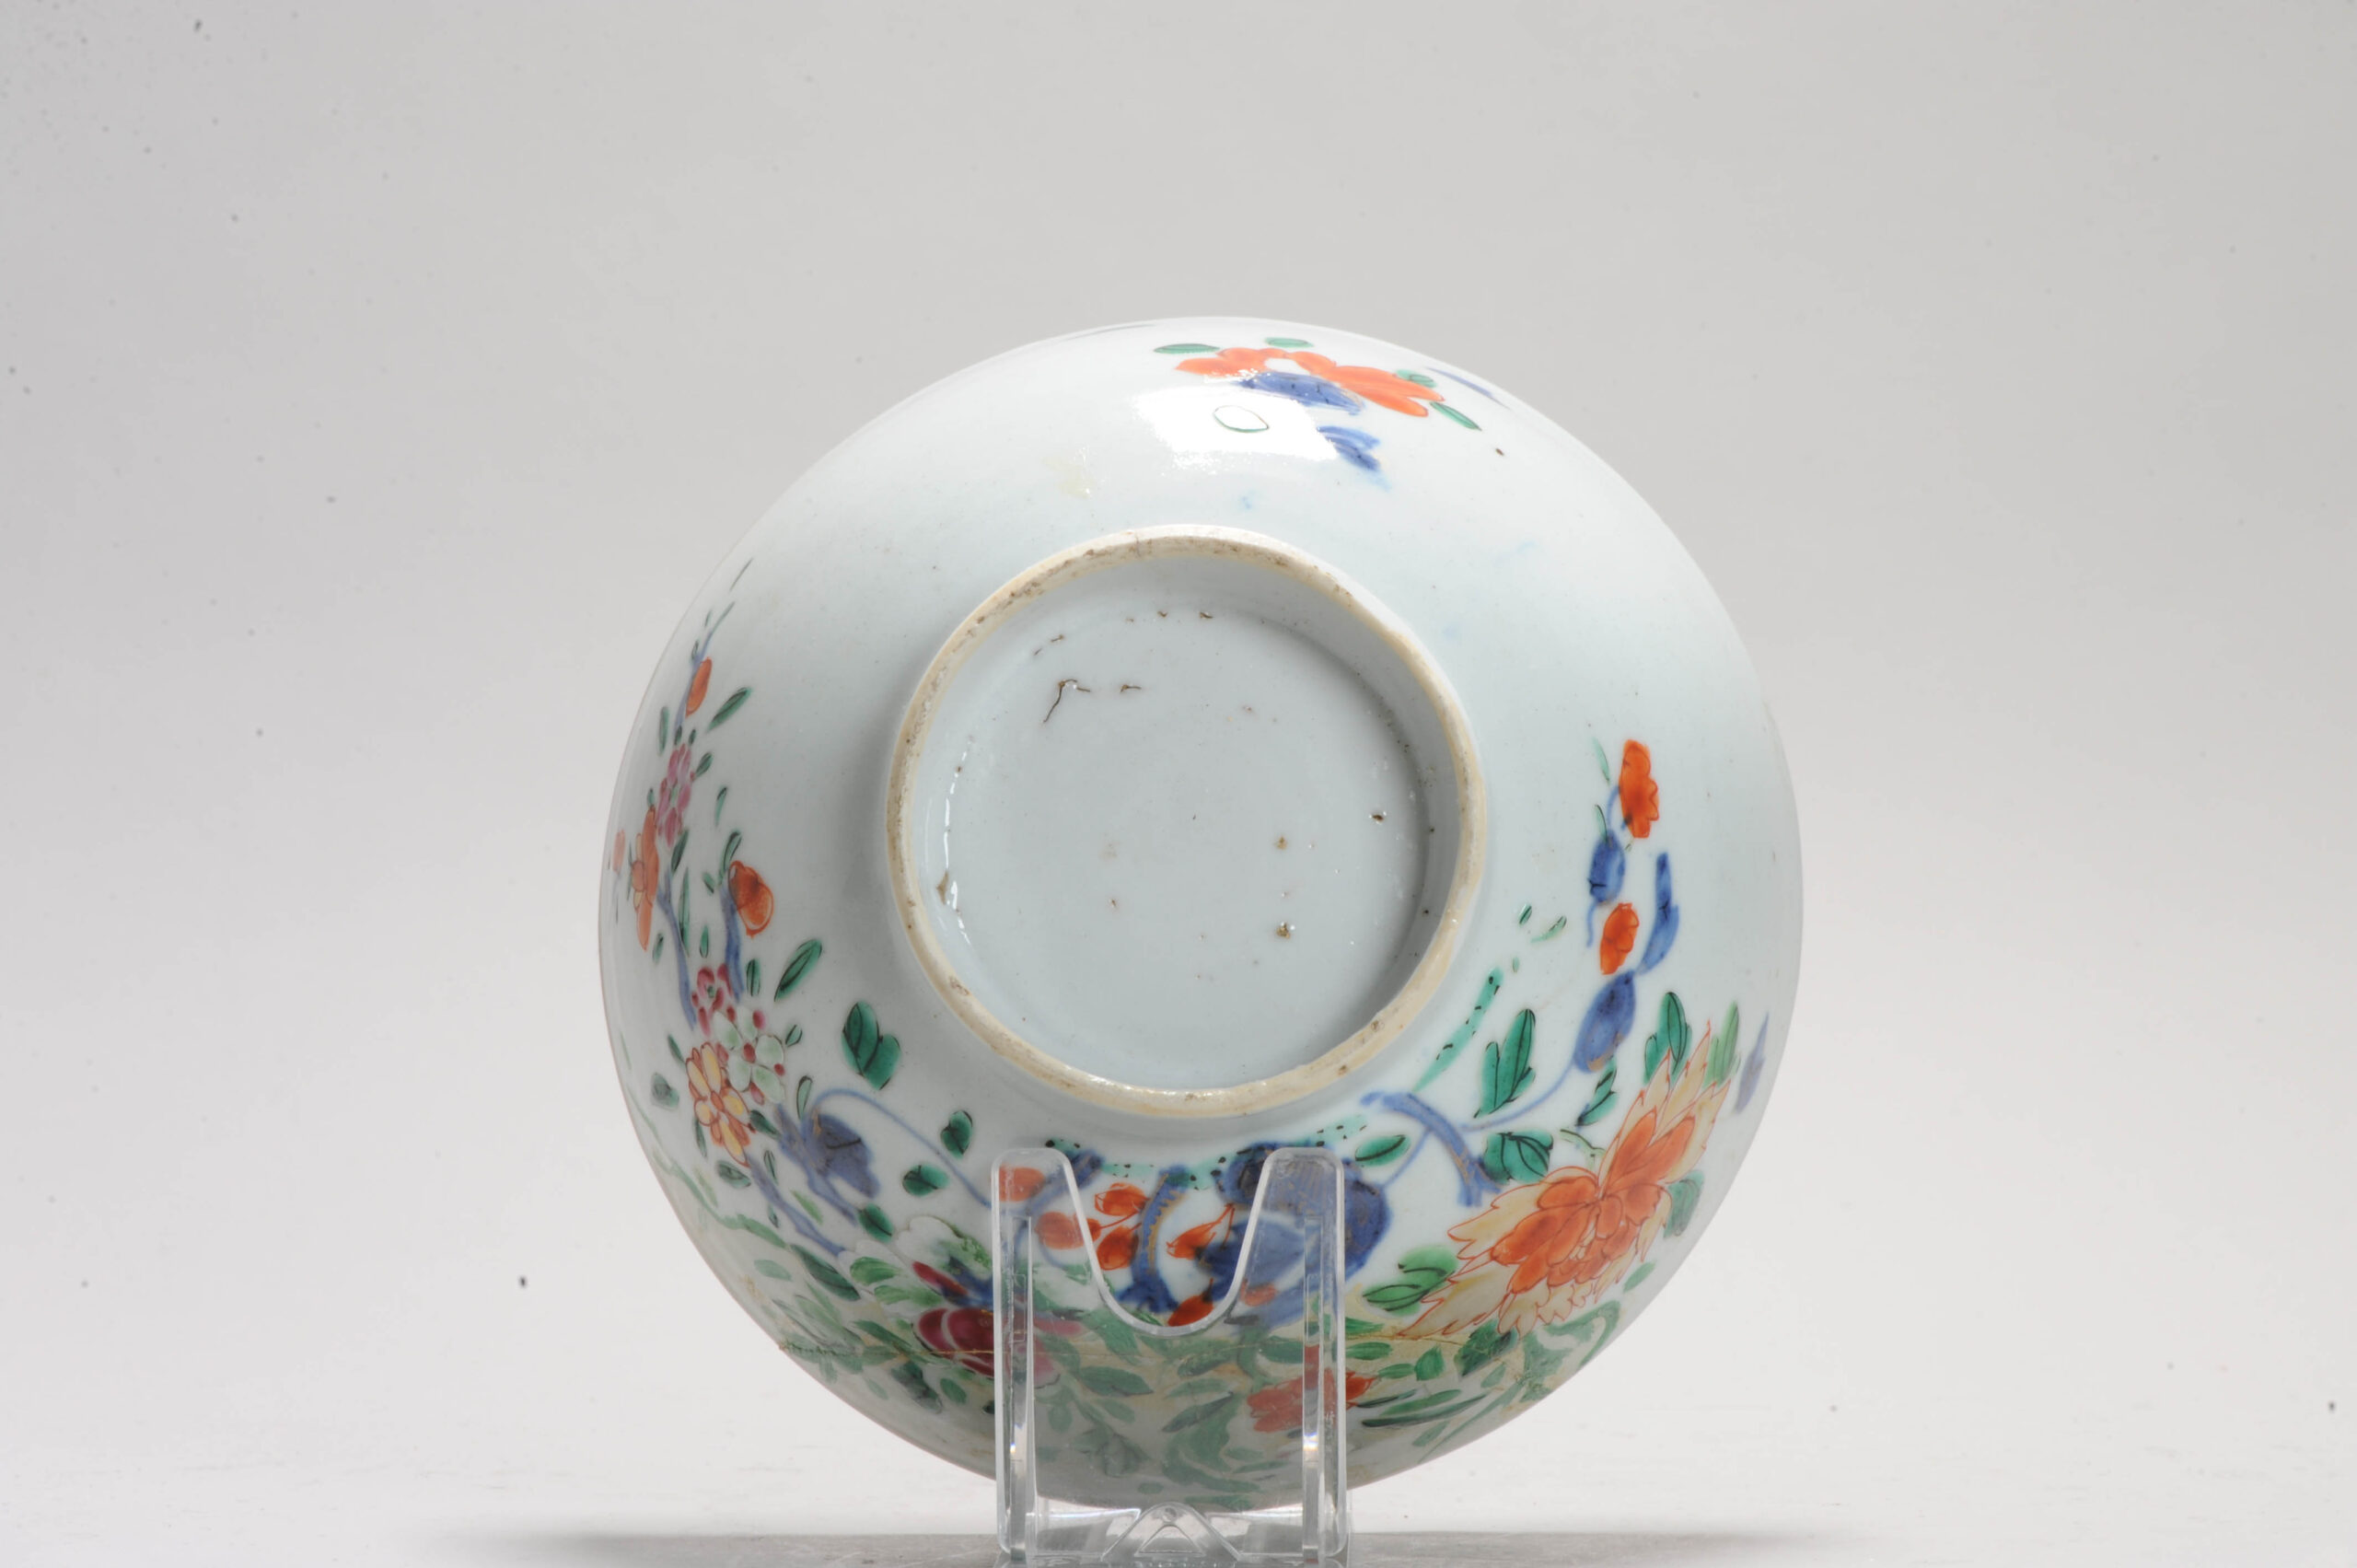 A Chinese Porcelain Famille Rose Bowl 18C Period Landscape Flower scene